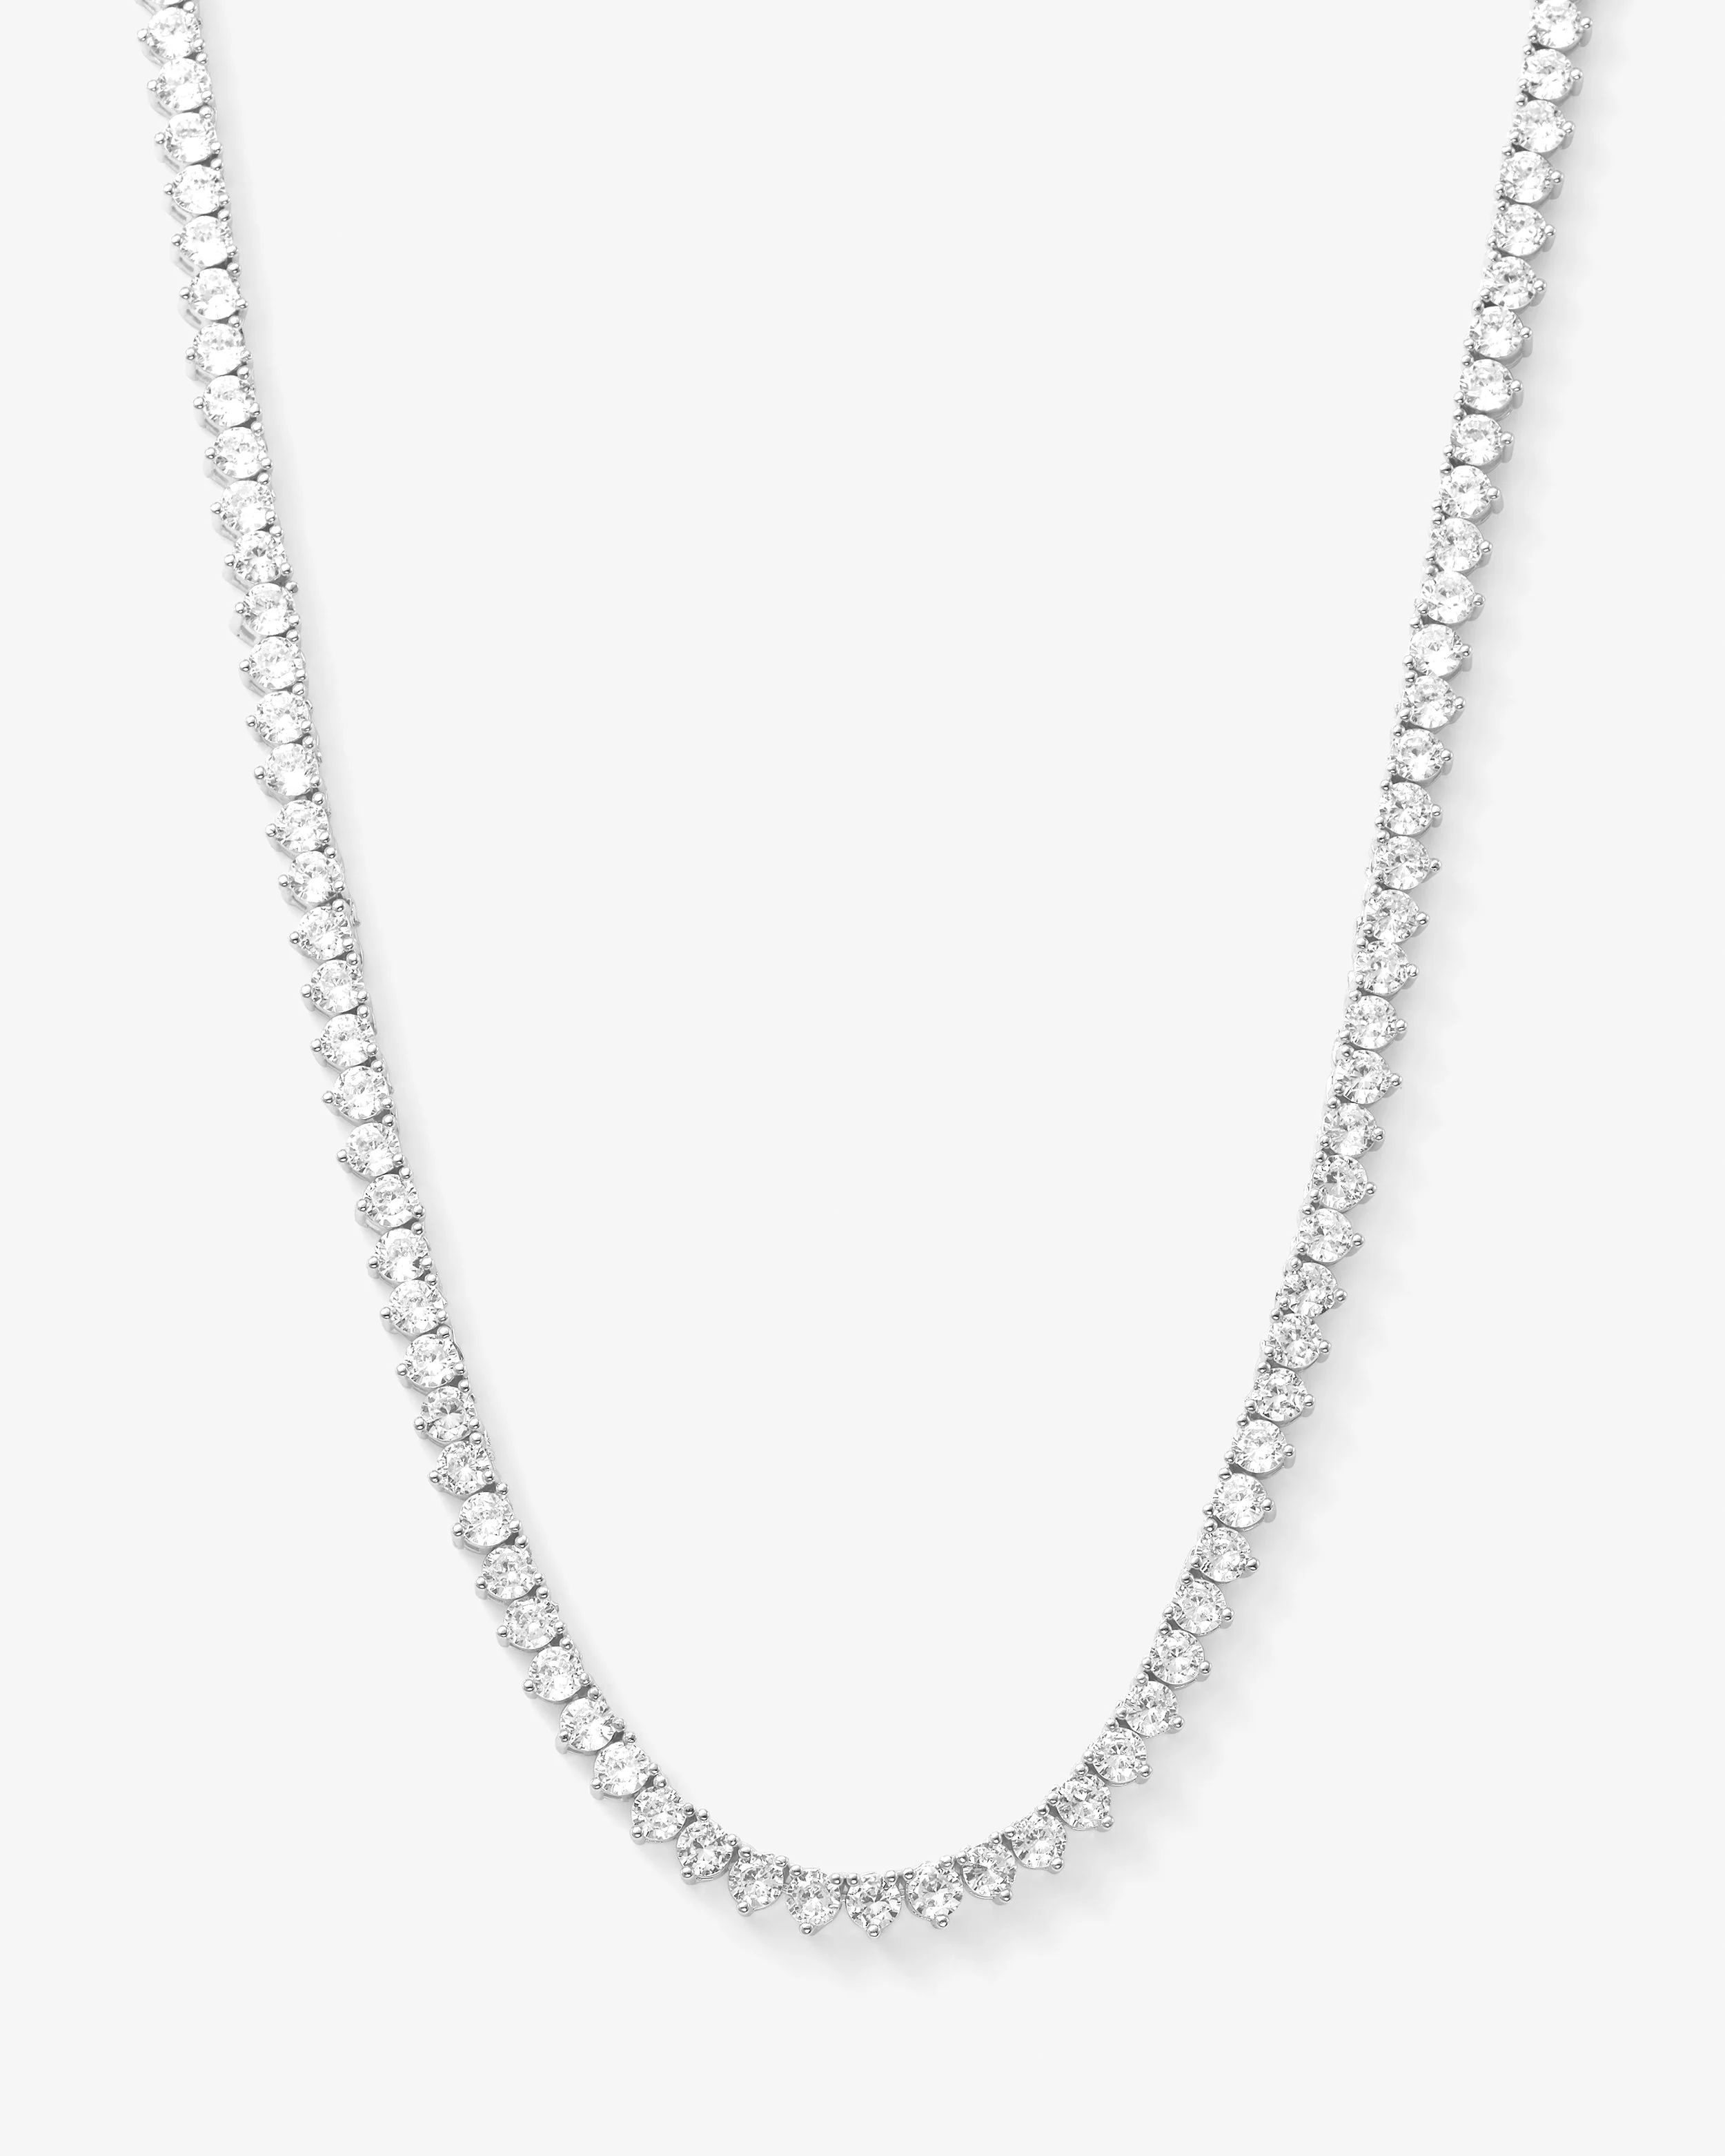 Not Your Basic Tennis Necklace 16" - Silver|White Diamondettes | Melinda Maria